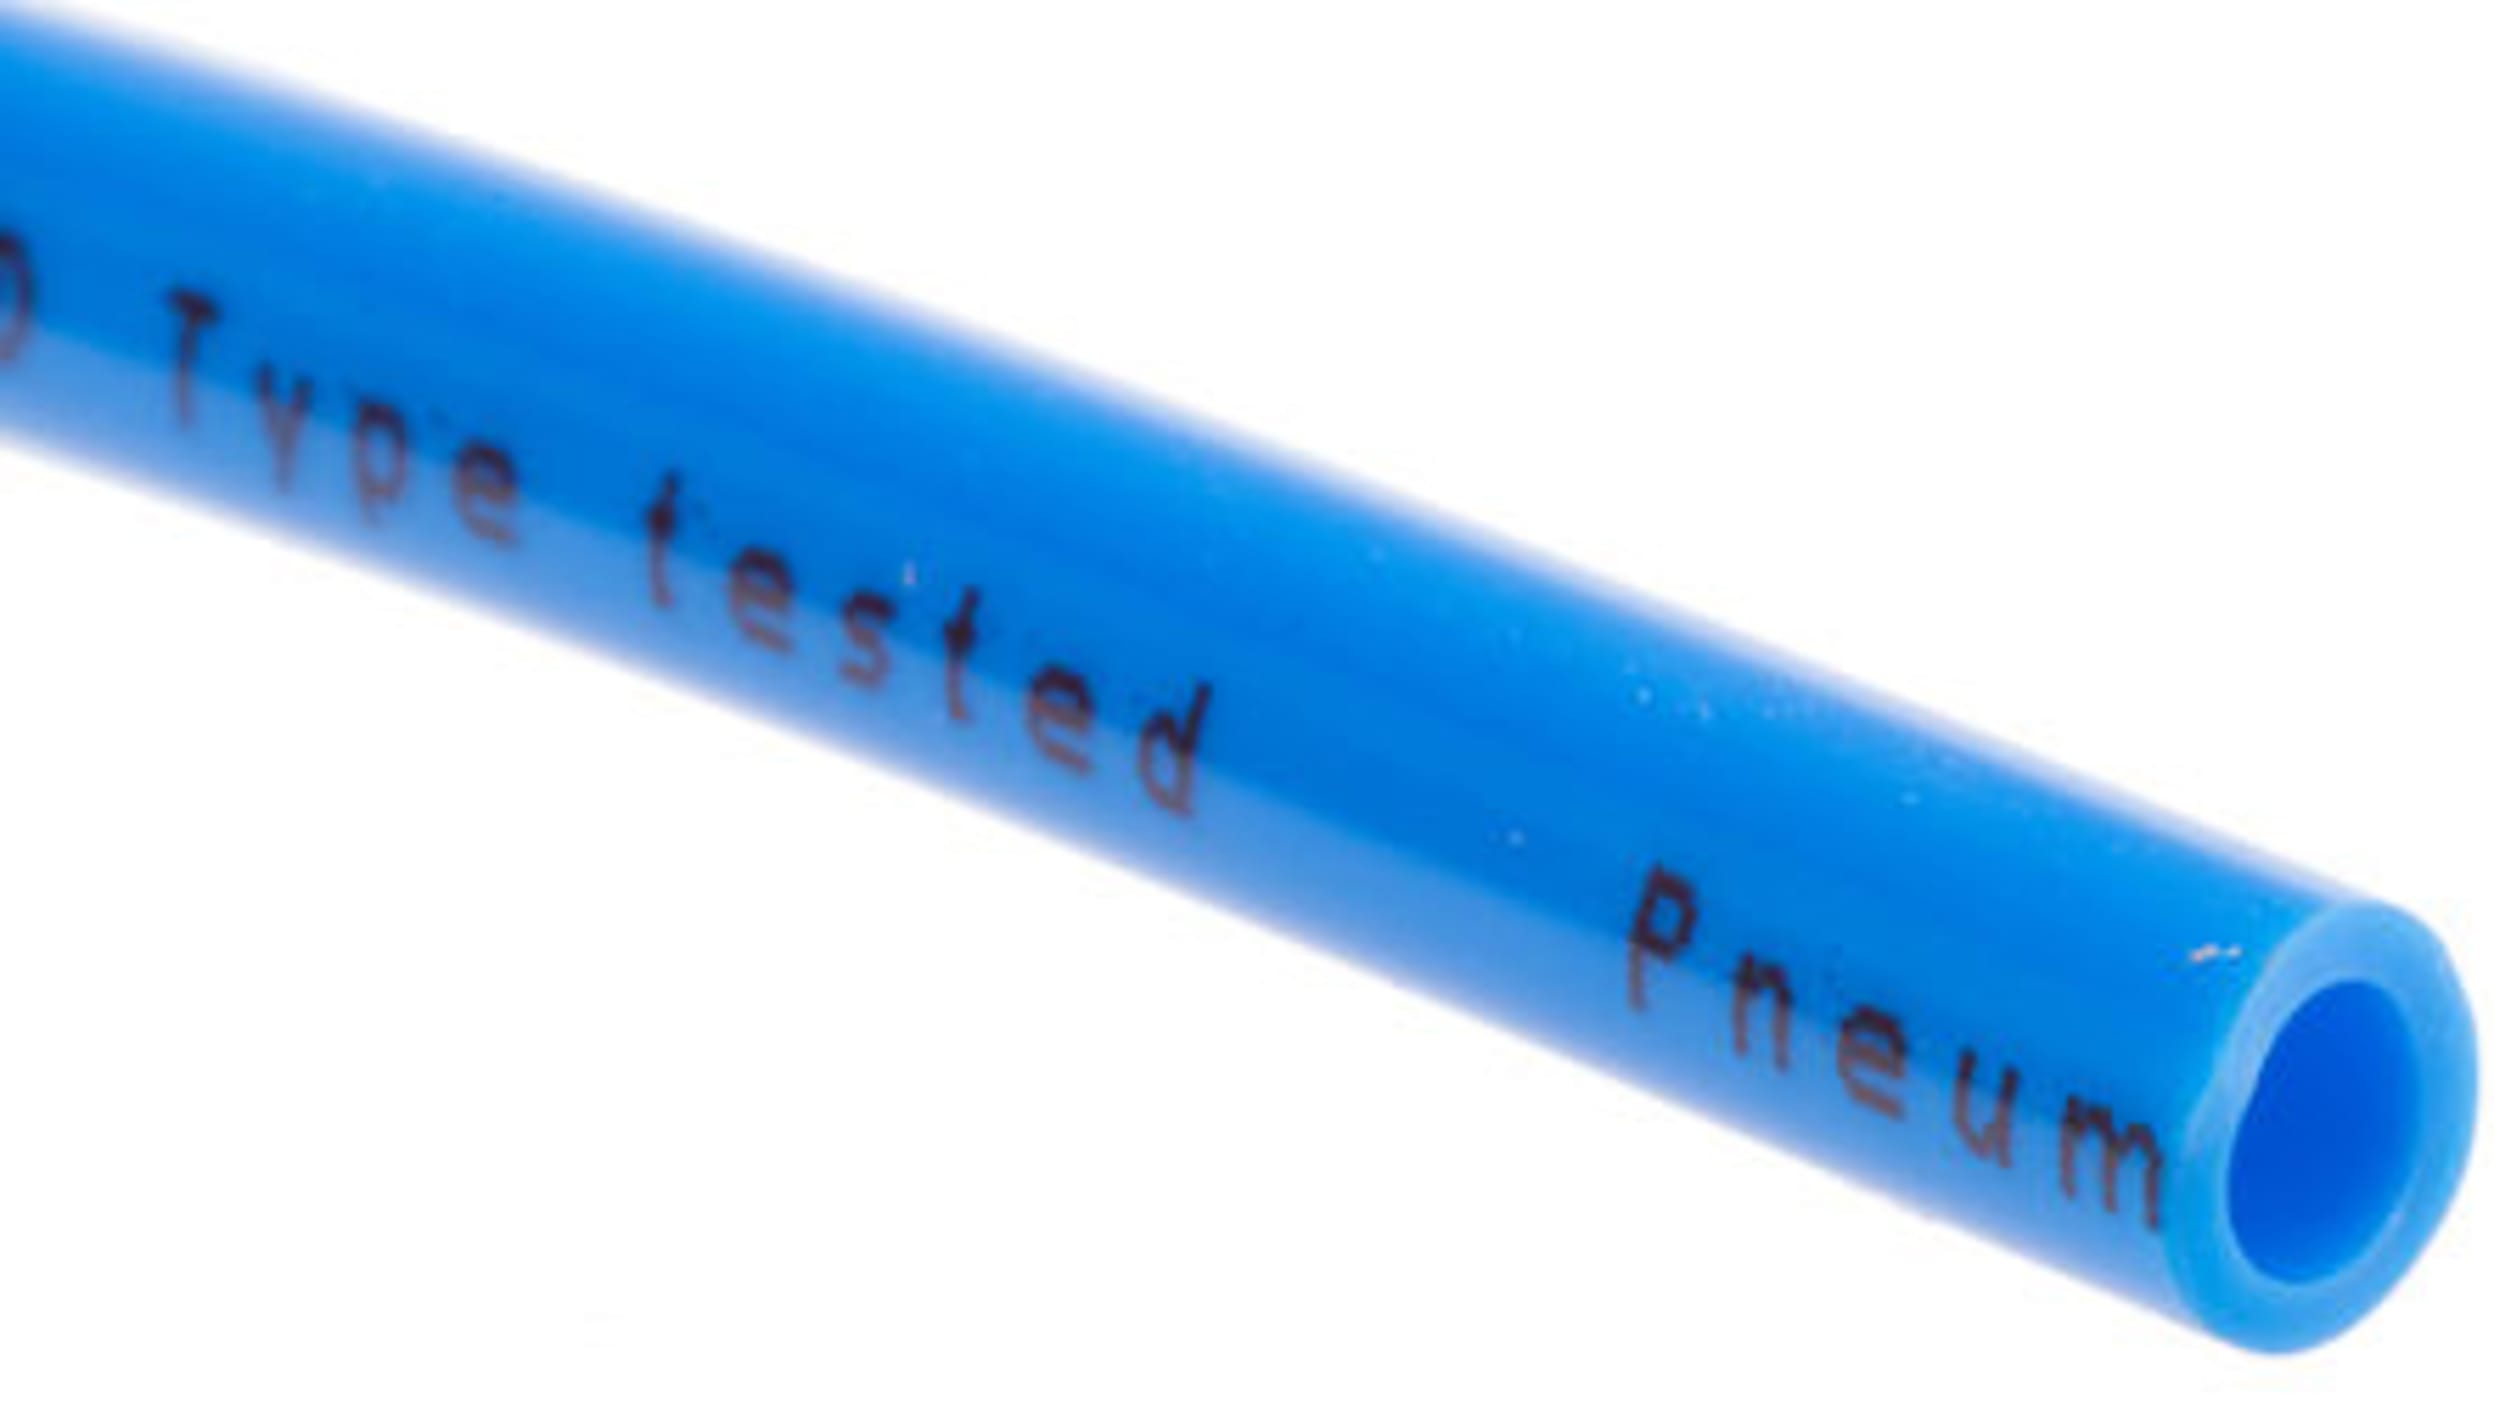 Tubes à Air Pneumatique 8mm OD x 5mm ID 3 Mètre (118 Pouce) PU Polyuréthane  Air Compresseur Tuyaux Tube Tuyau Bleu 